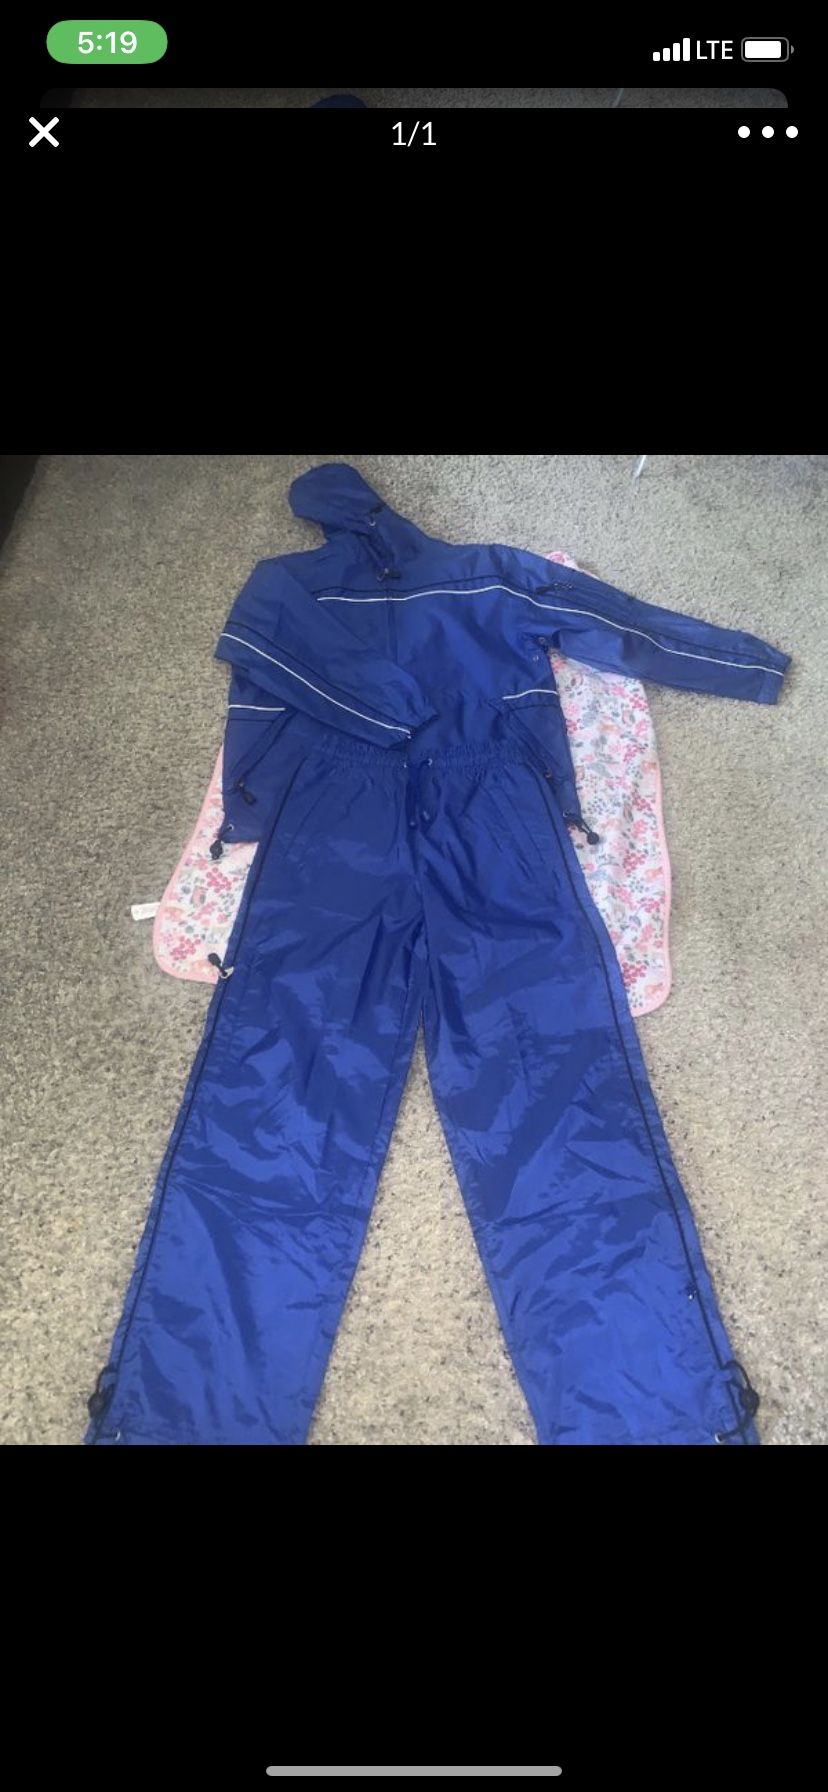 $65 Brand new rain sweat suit size large